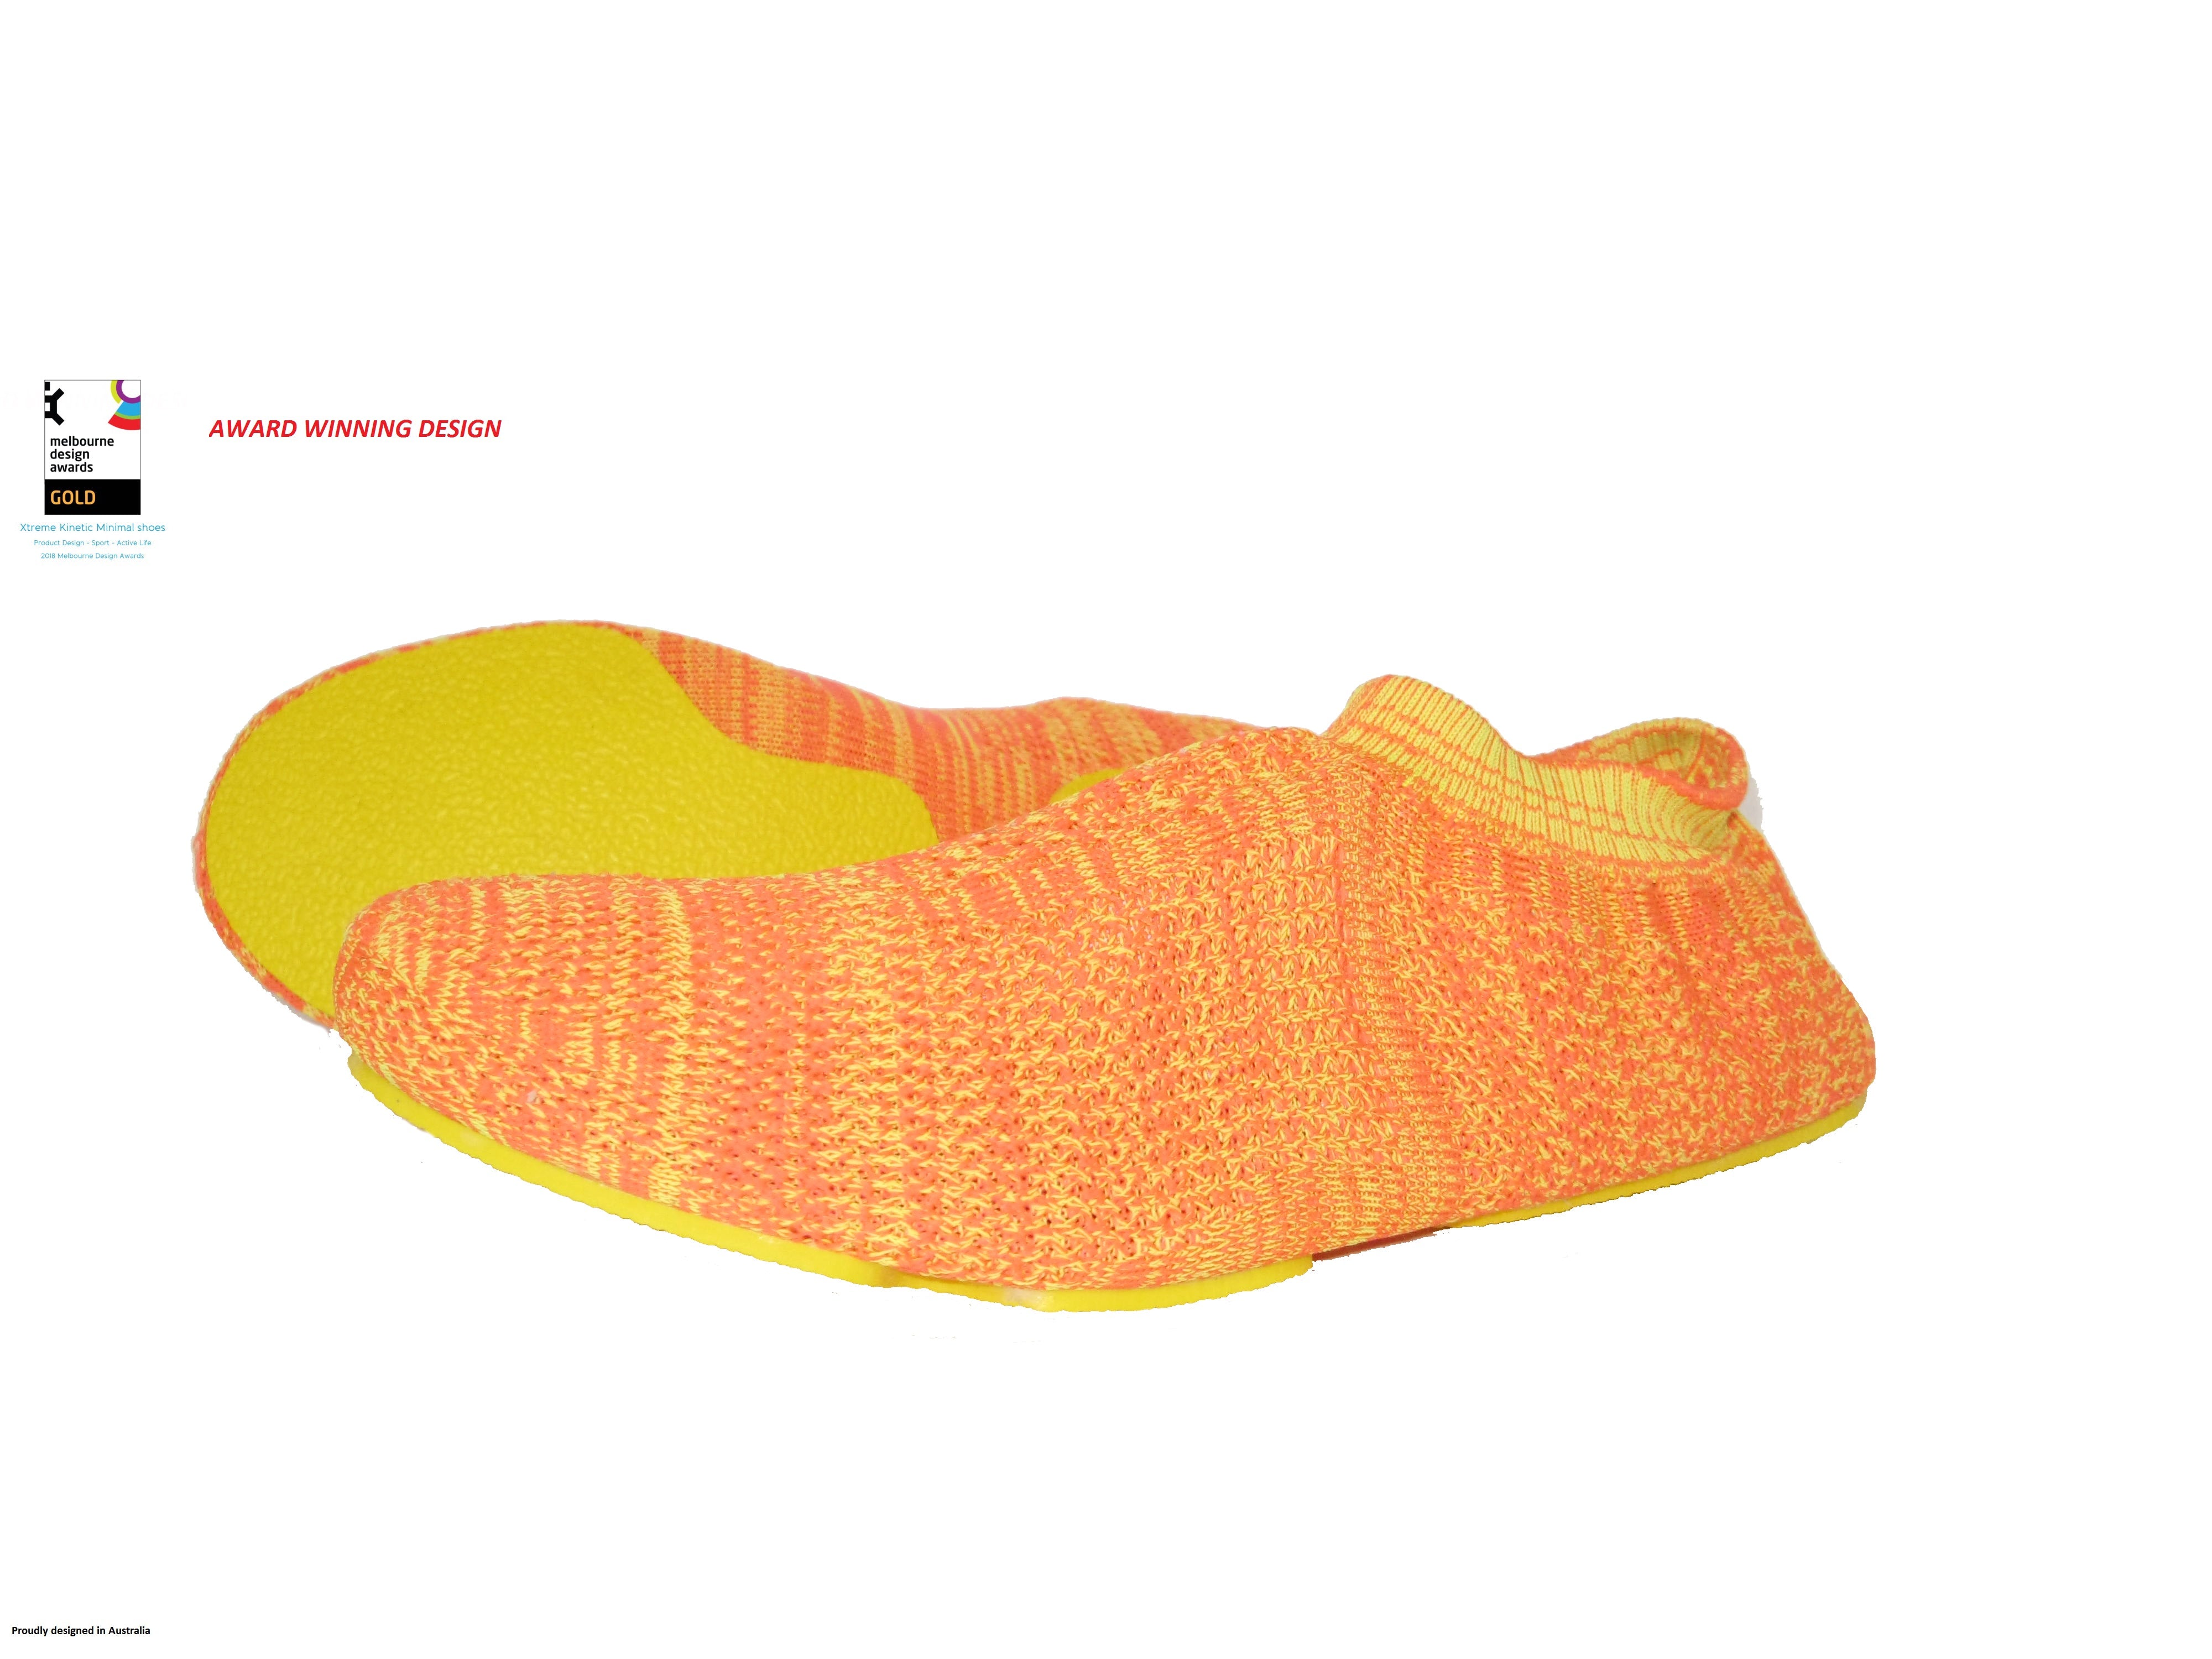 XtremeKinetic Minimal training shoes yellow/orange size US WOMEN(8-9) US MAN(6.5 -7.5)   EURO SIZE 39-40 from Deals499 at Deals499